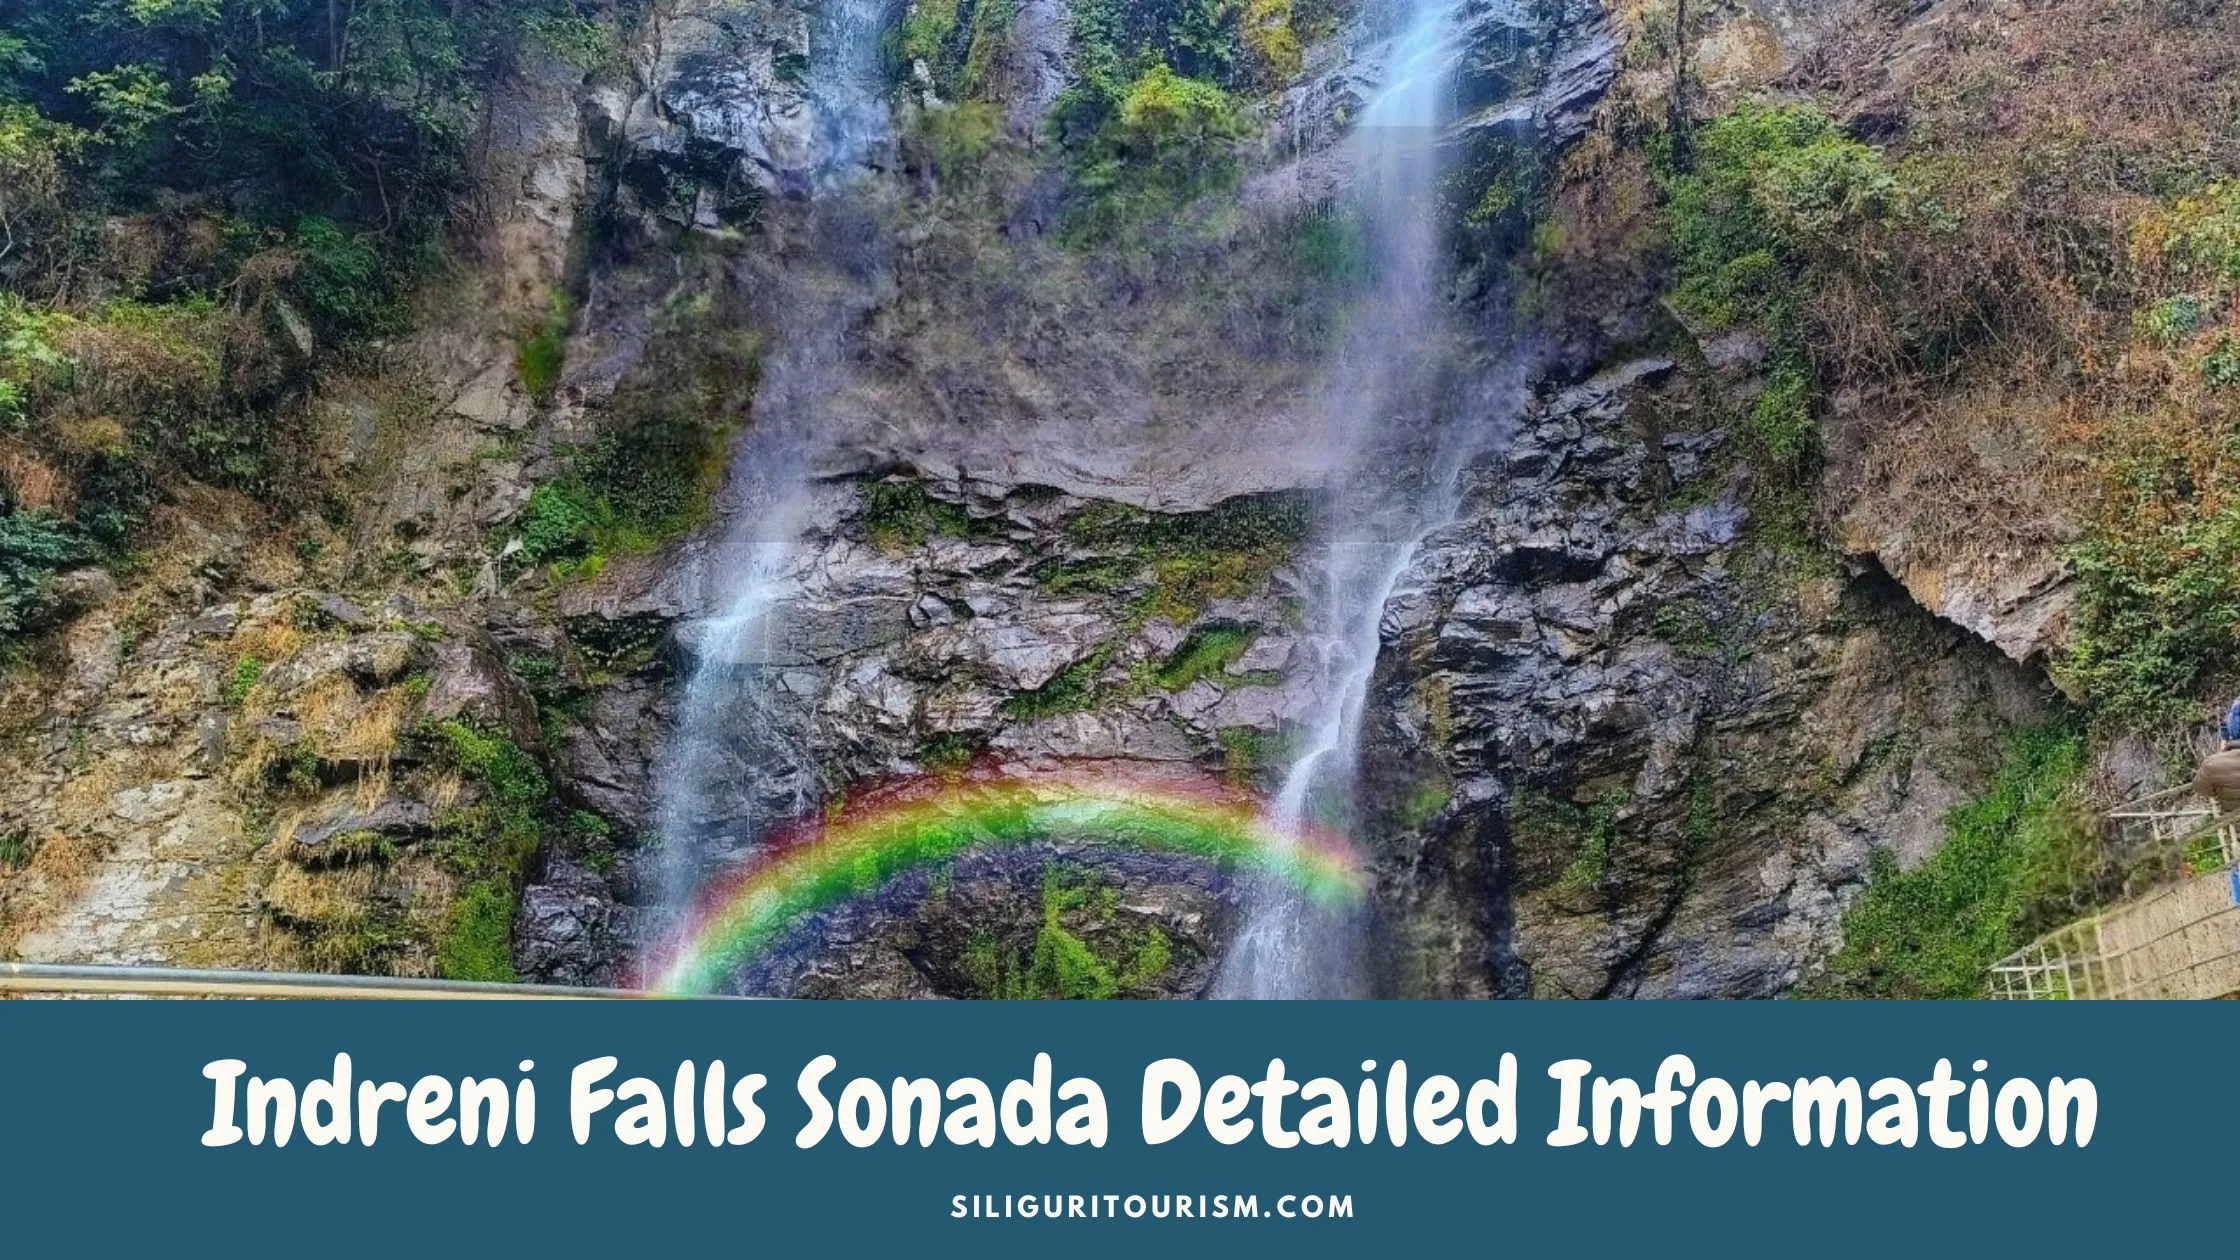 Indreni Falls Sonada Information